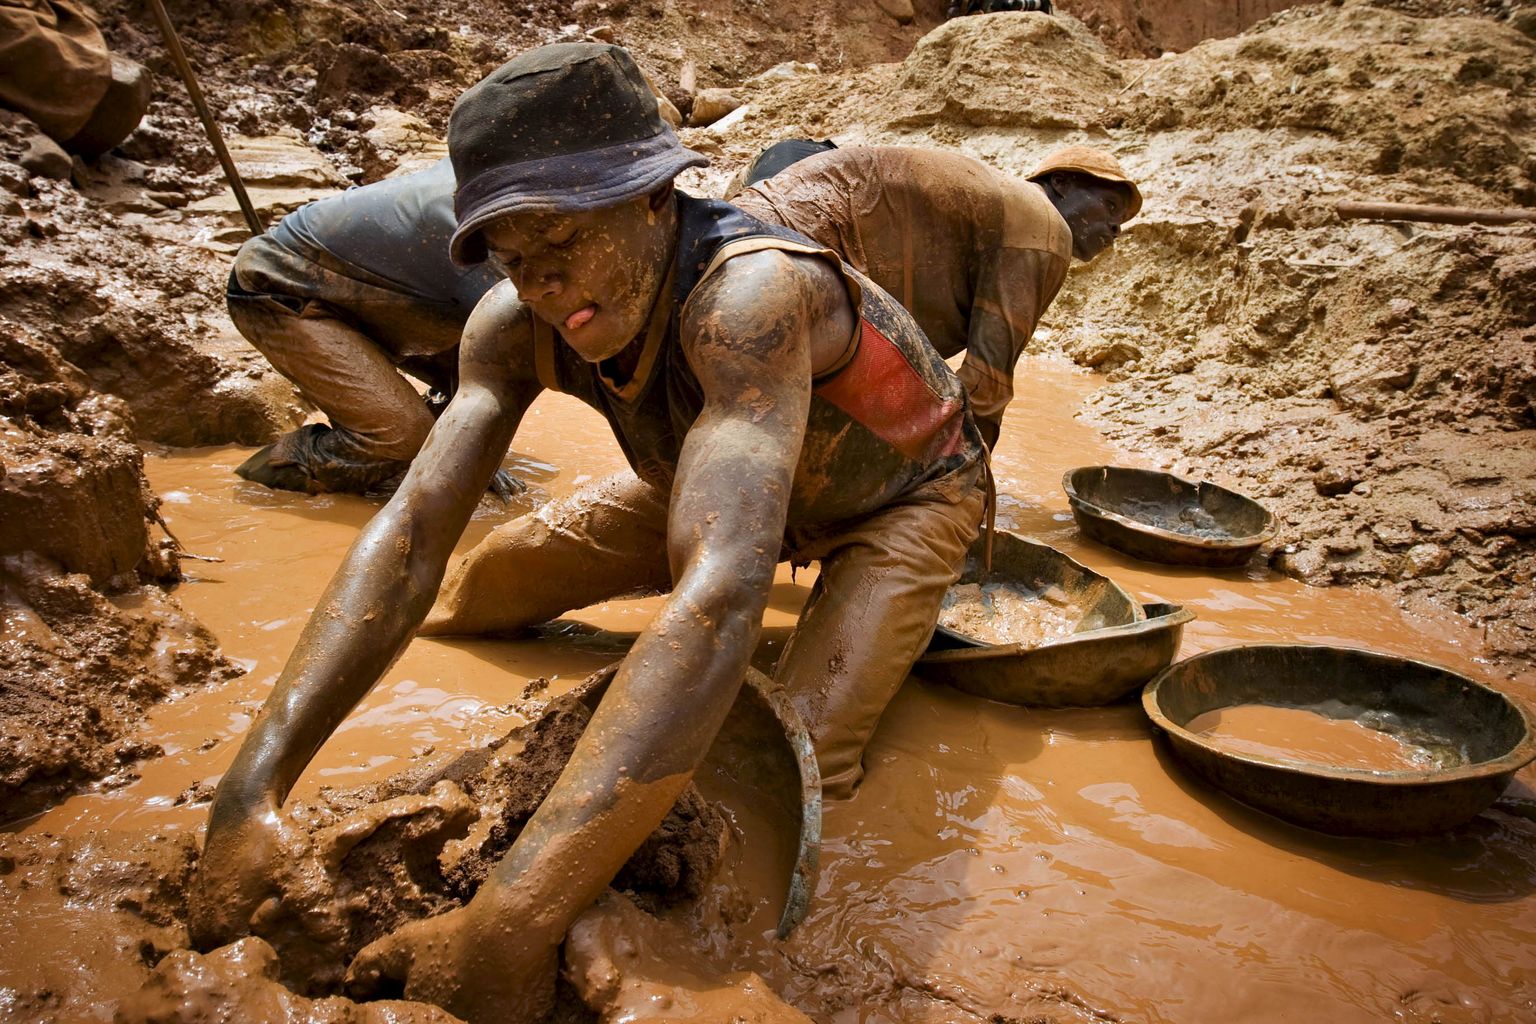 Kulla kaevandamine Kongo DV-s. Illustreeriv pilt.